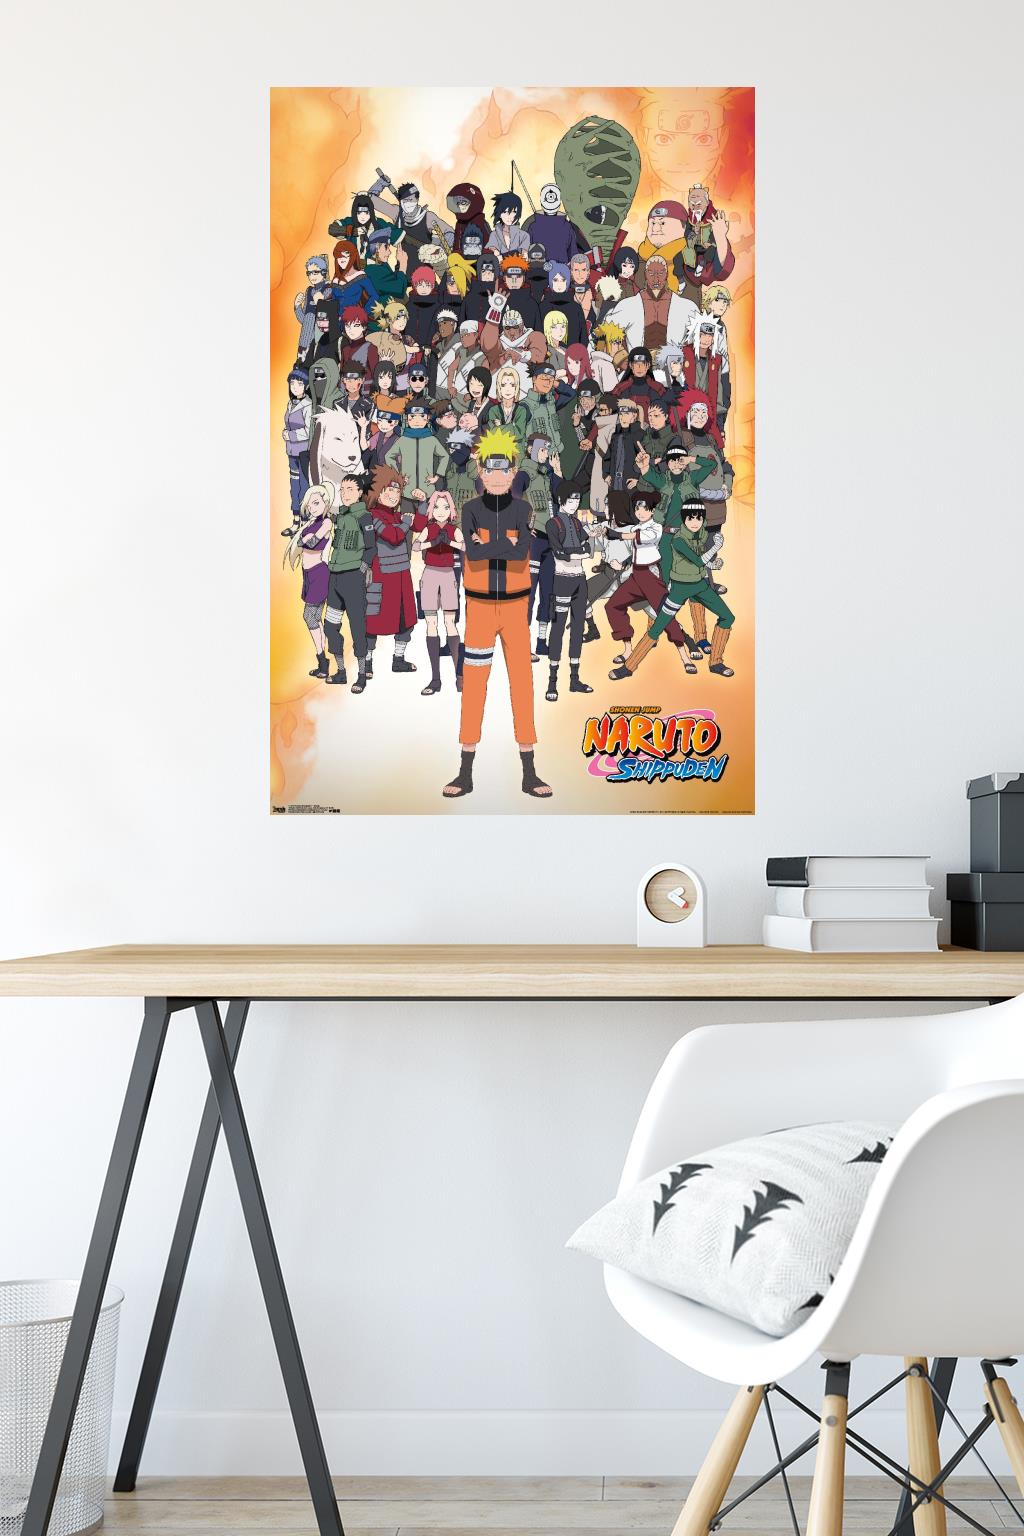 Naruto Shippuden - Group Wall Poster, 22.375" x 34" - image 4 of 4